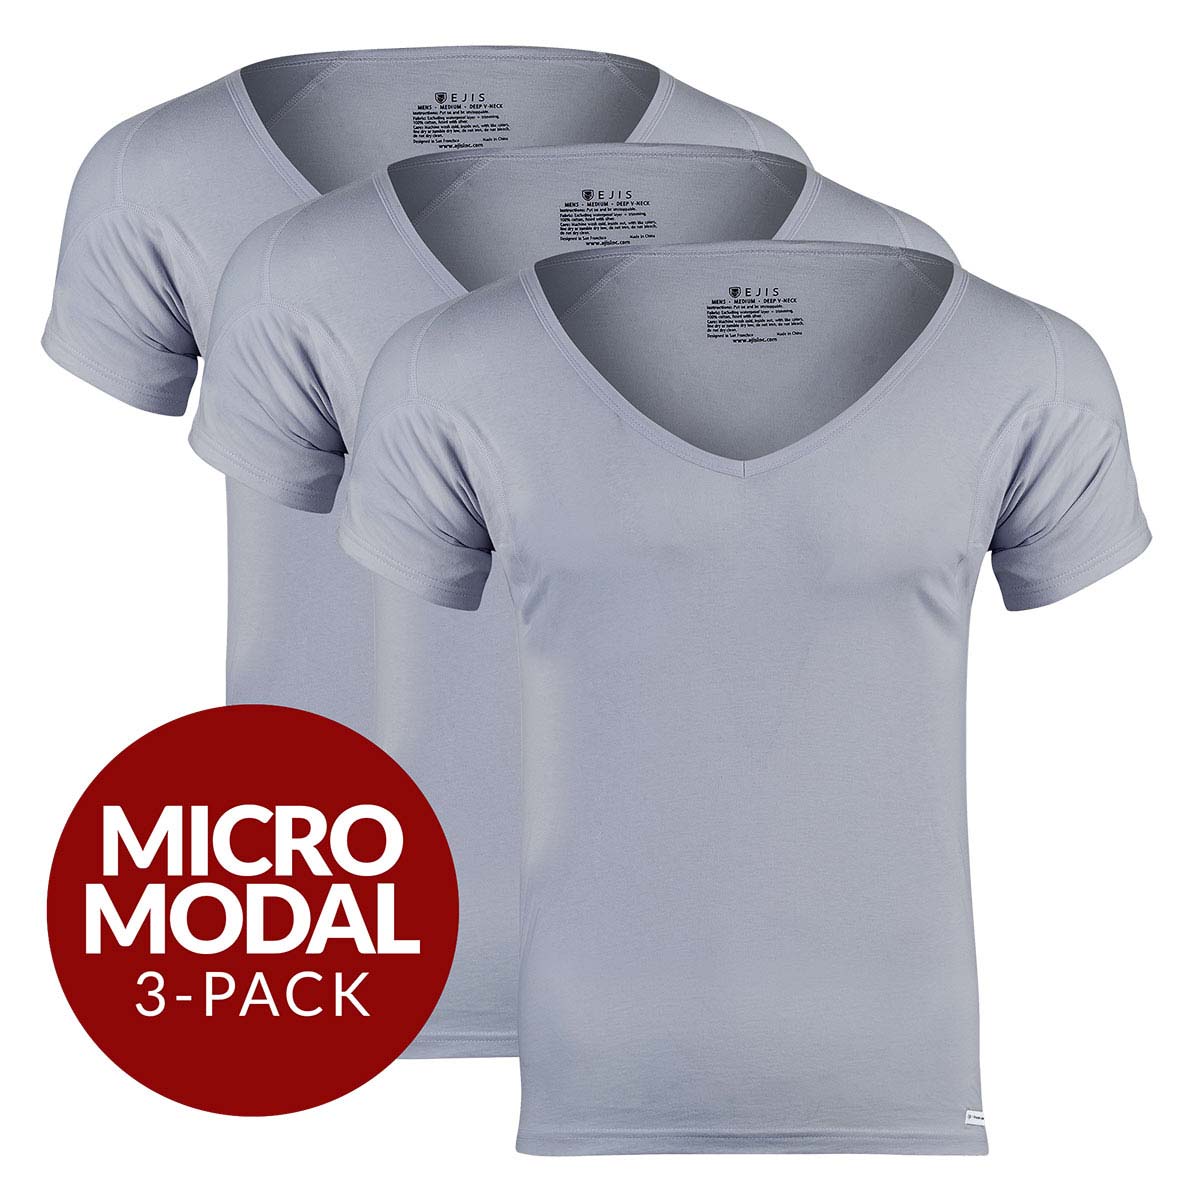 Deep V Micro Modal Sweat Proof Undershirt For Men - Grey 3-Pack - Ejis